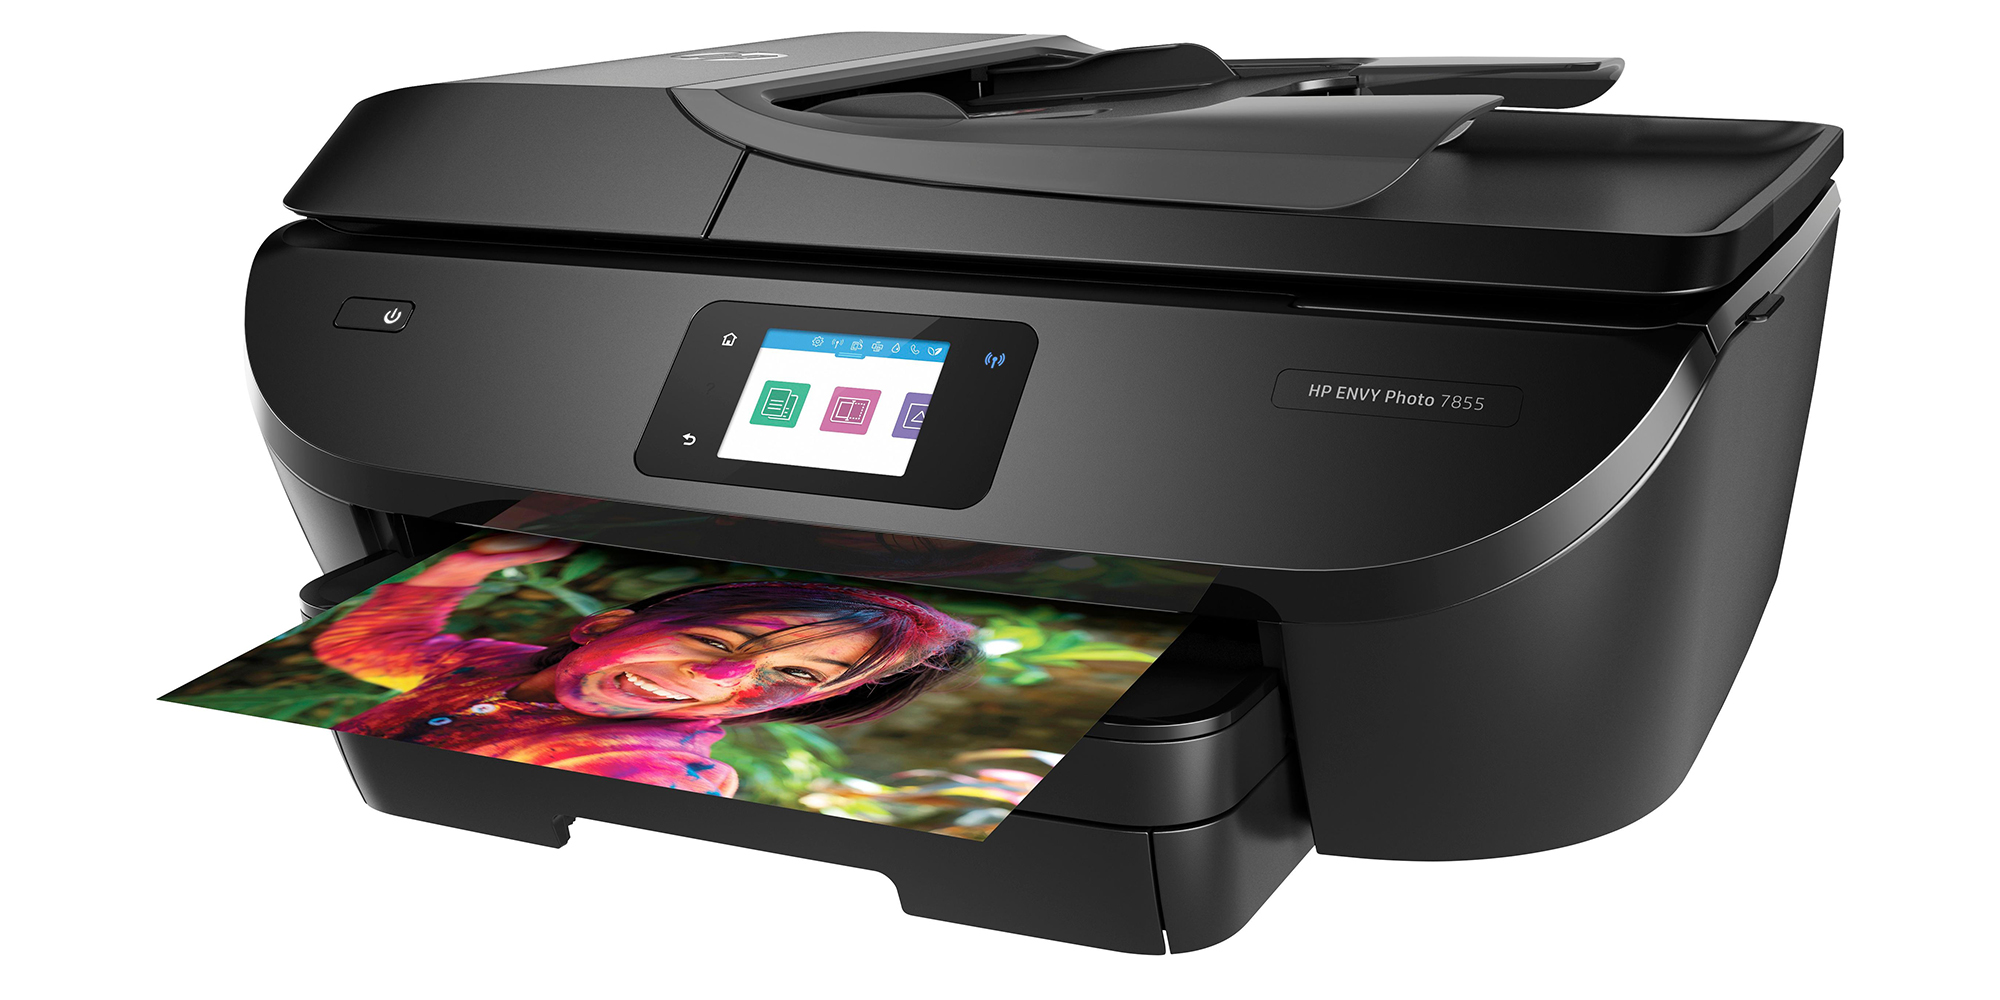 HP's AllinOne Wireless Inkjet Printer w/ AirPrint on sale for 80